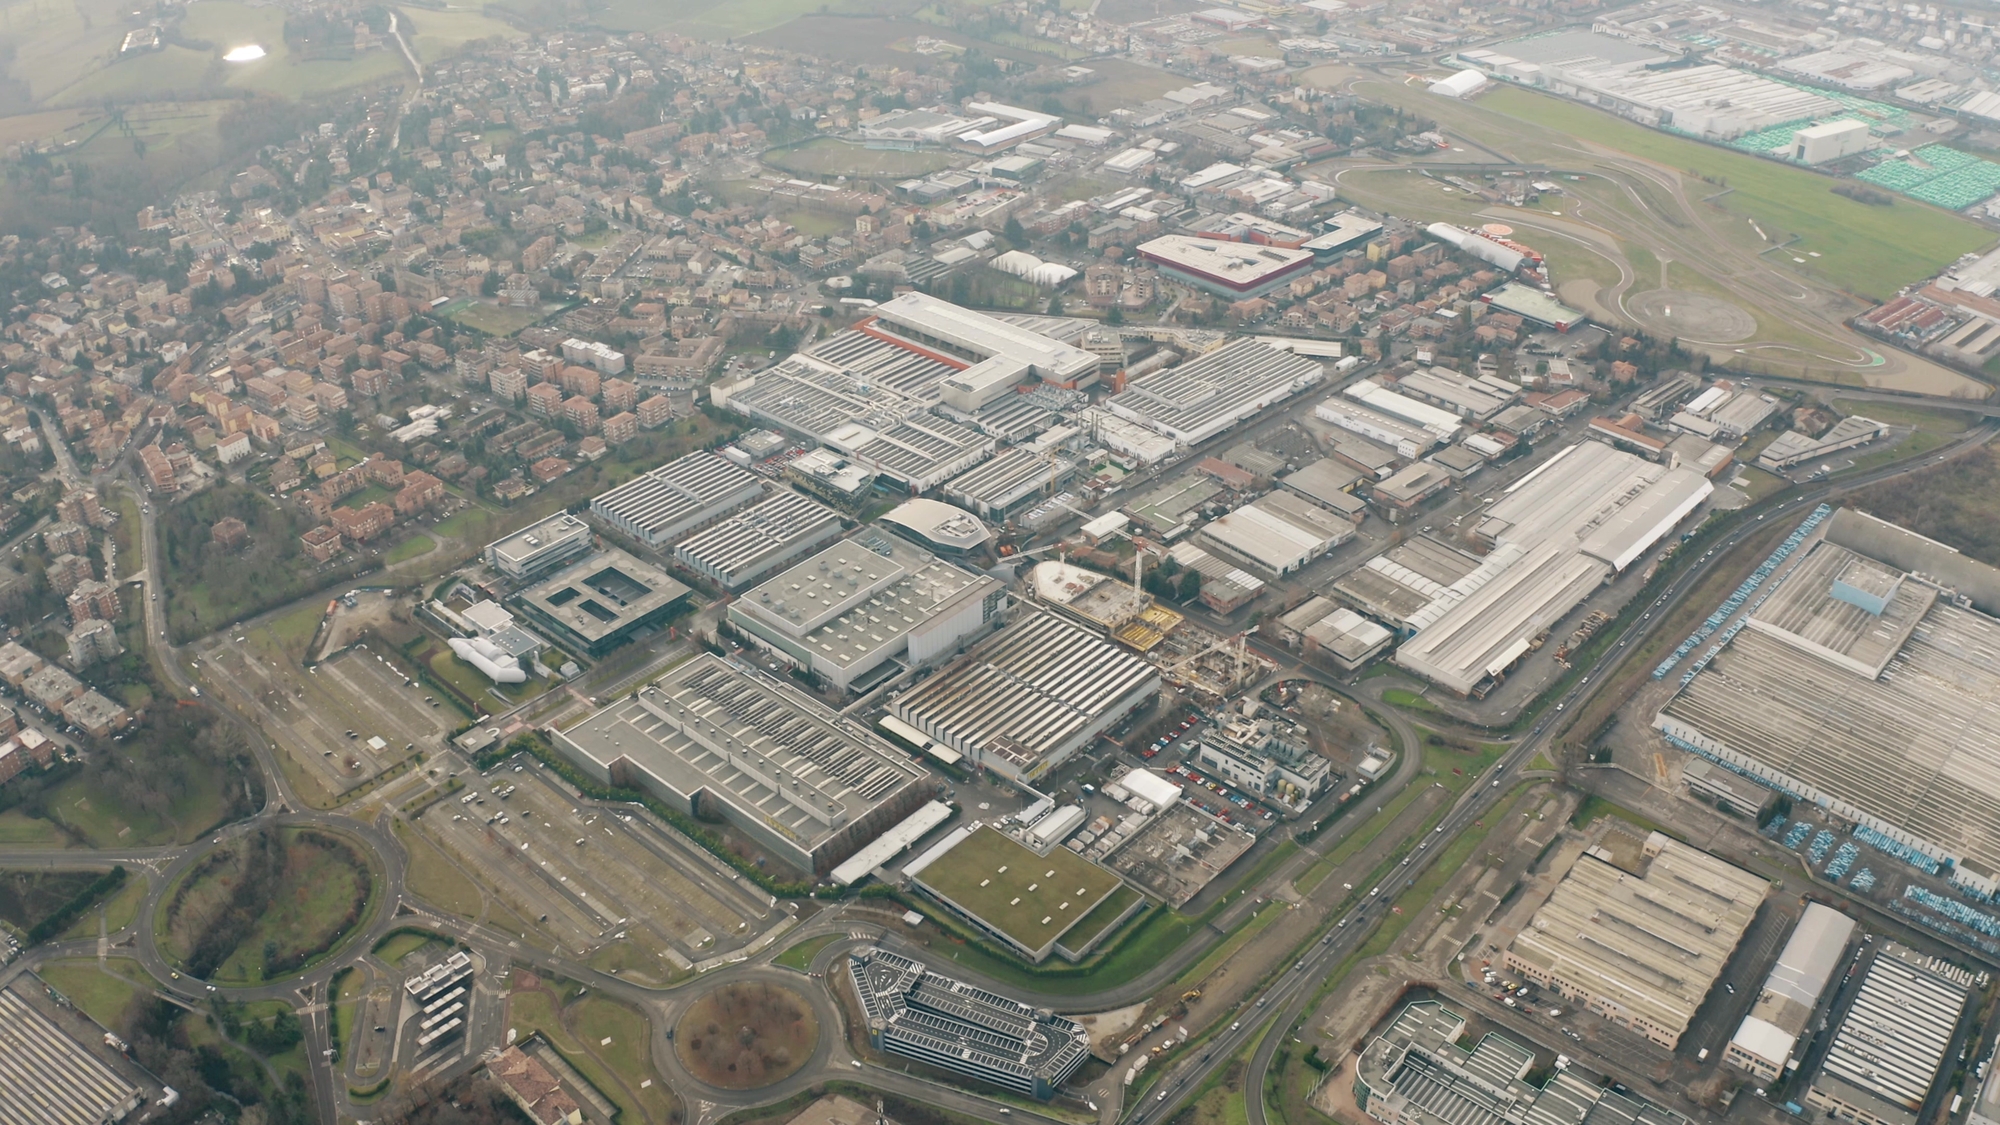 MARANELLO, ITALY - Aerial shot of the Ferrari factory and school